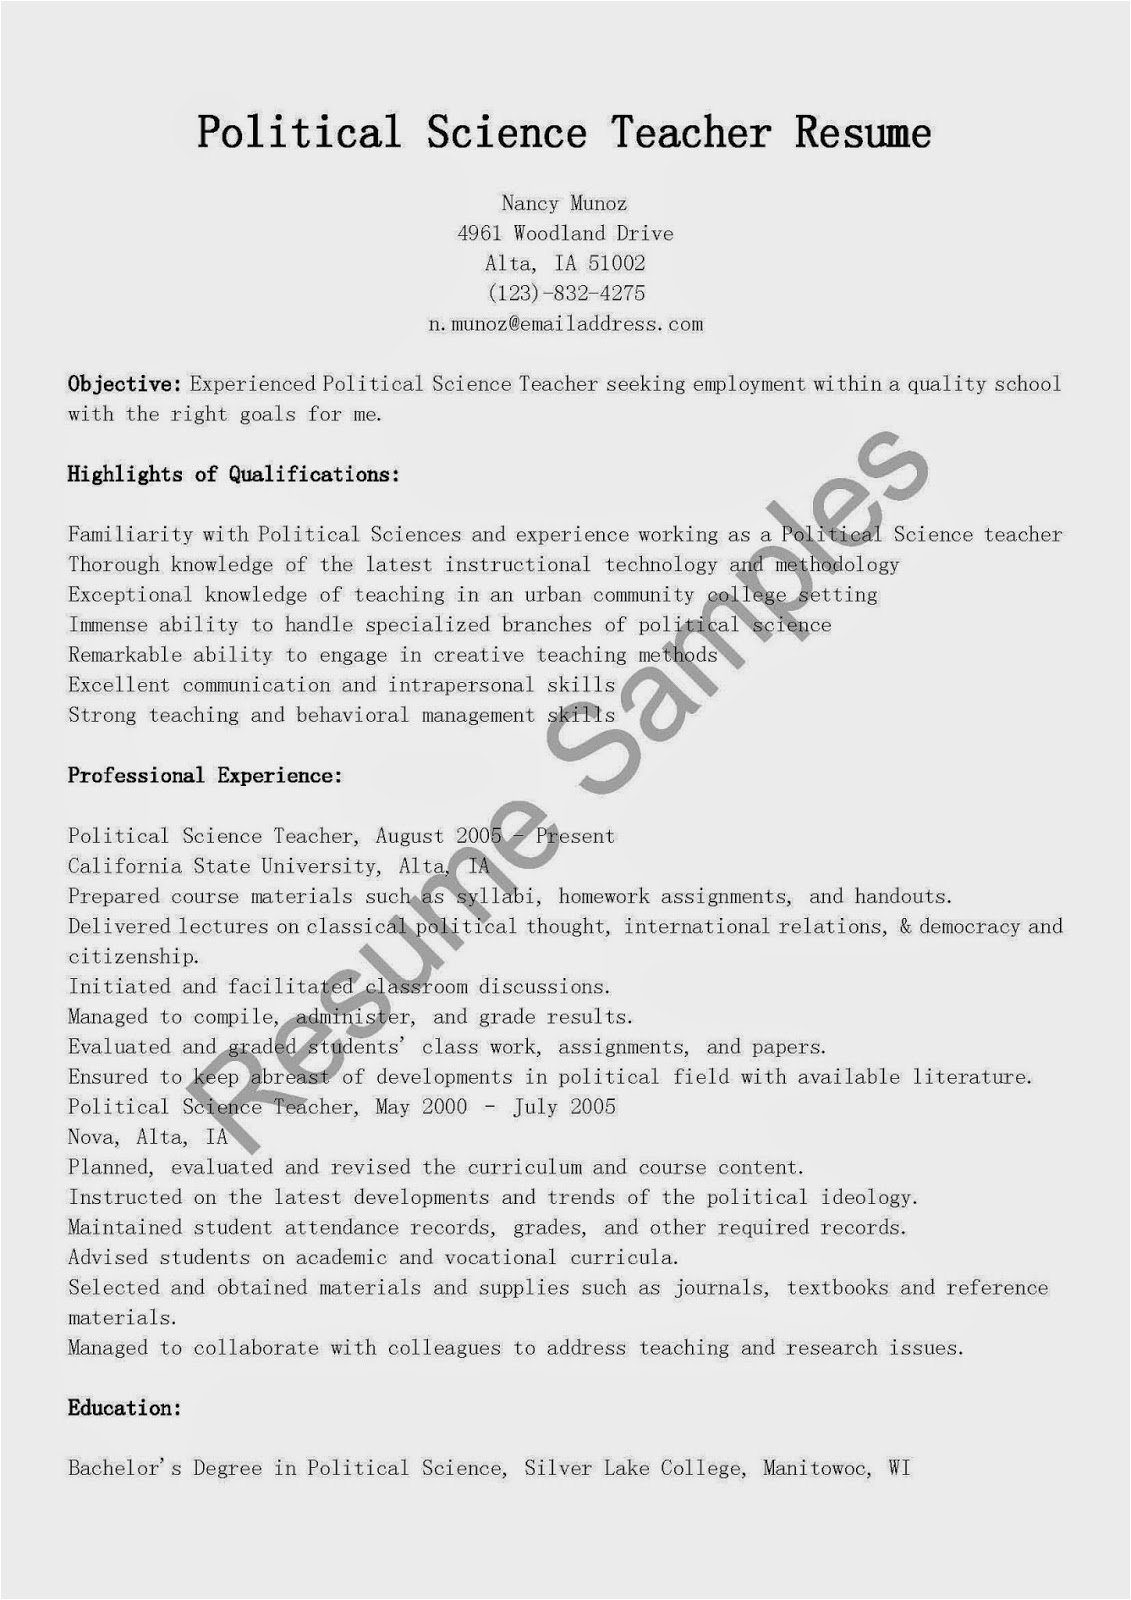 Sample Resume Ucla Graduate Political Science Major Resume Samples Political Science Teacher Resume Sample